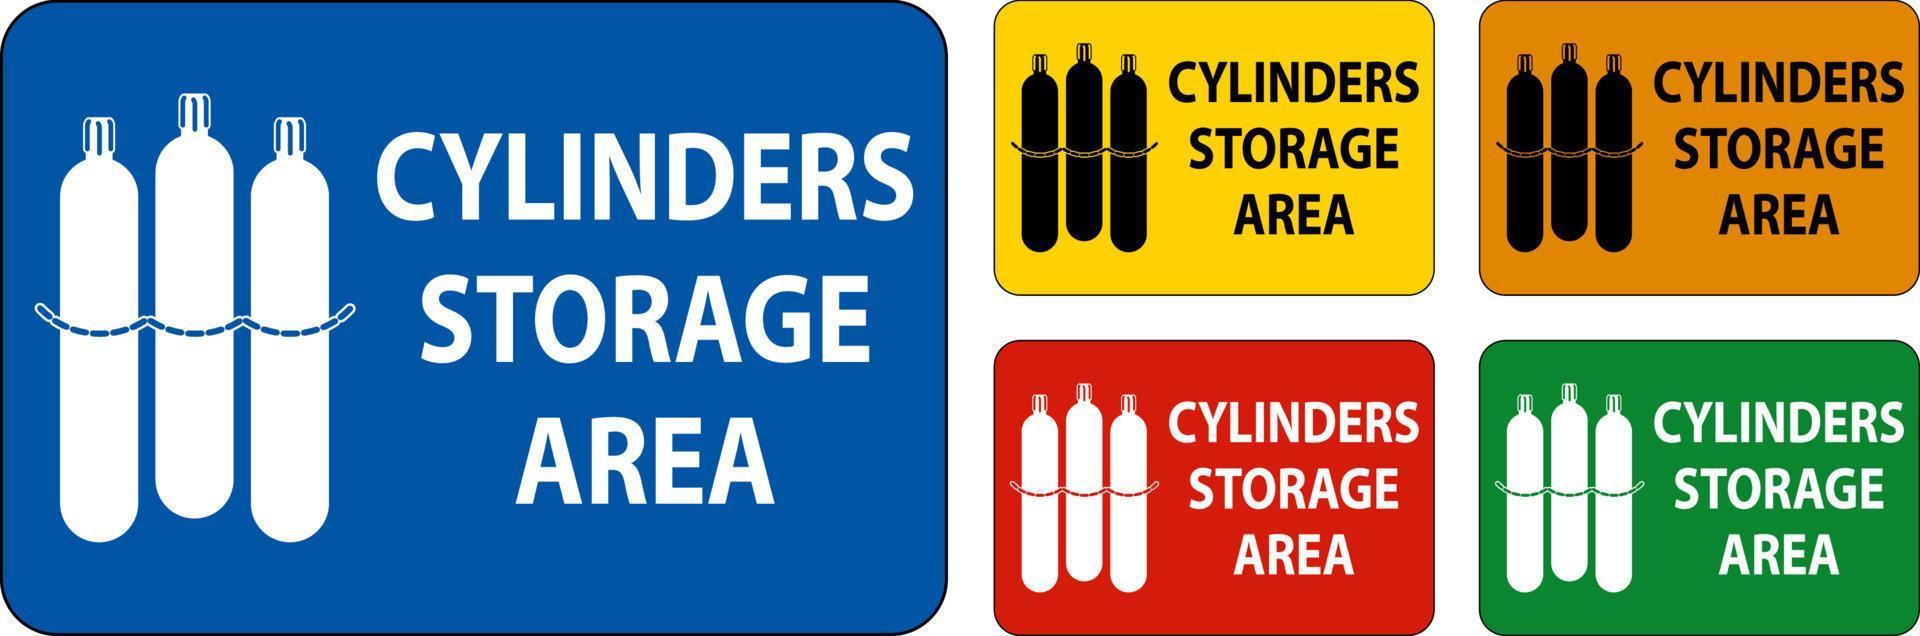 Cylinder Storage Sign Cylinder Storage Area vector